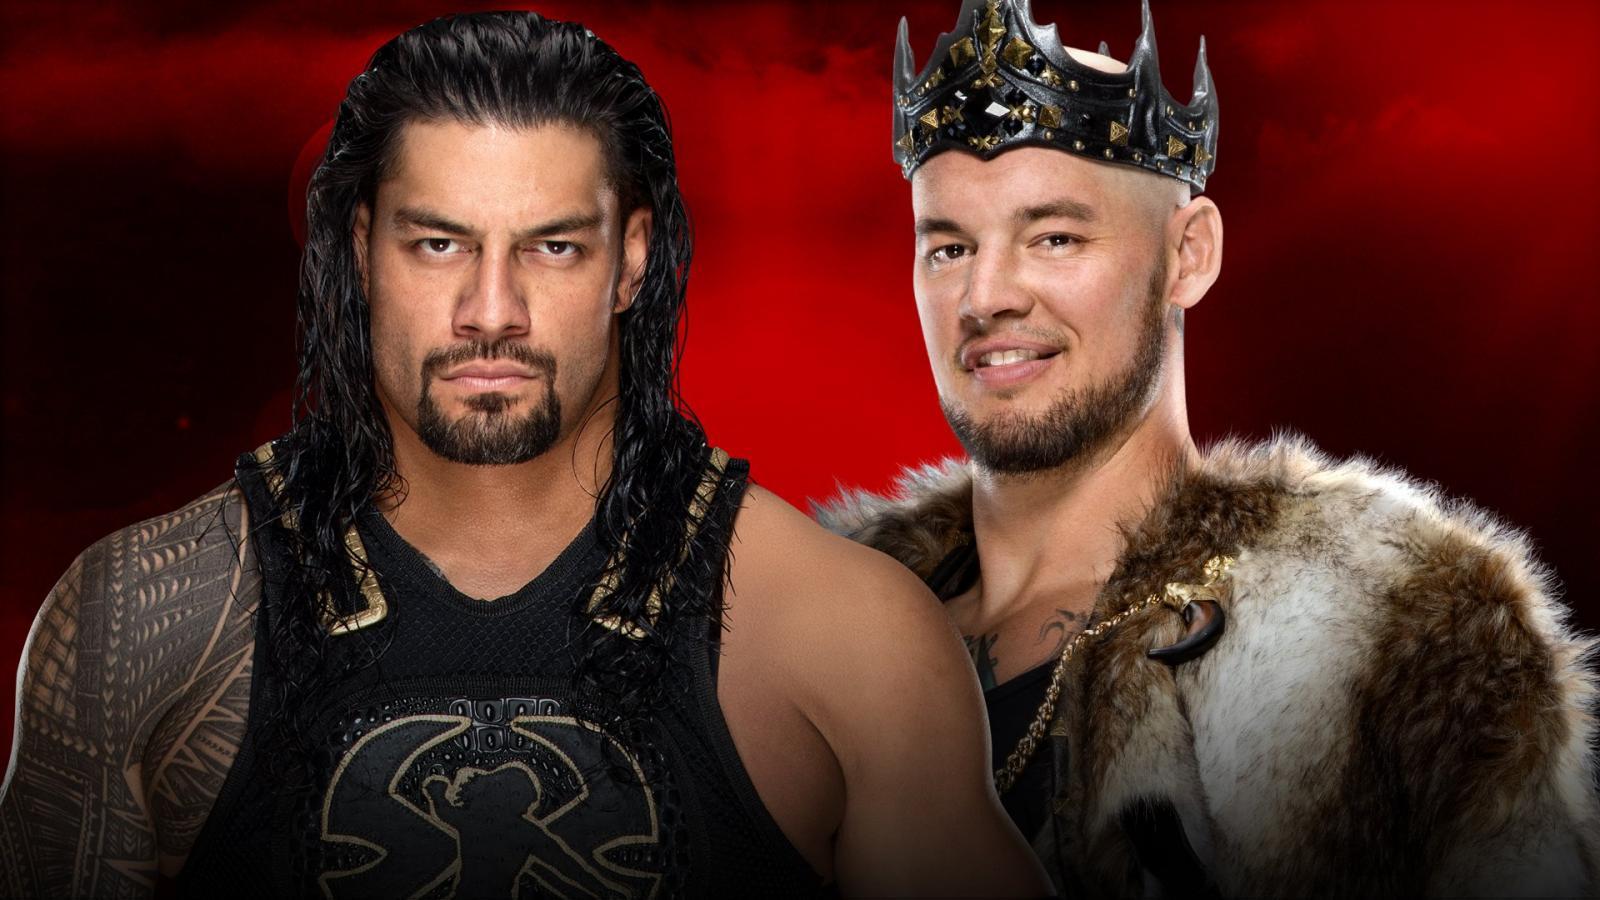 Roman Reigns 24 7 Online Royal Rumble 2020 Match Preview